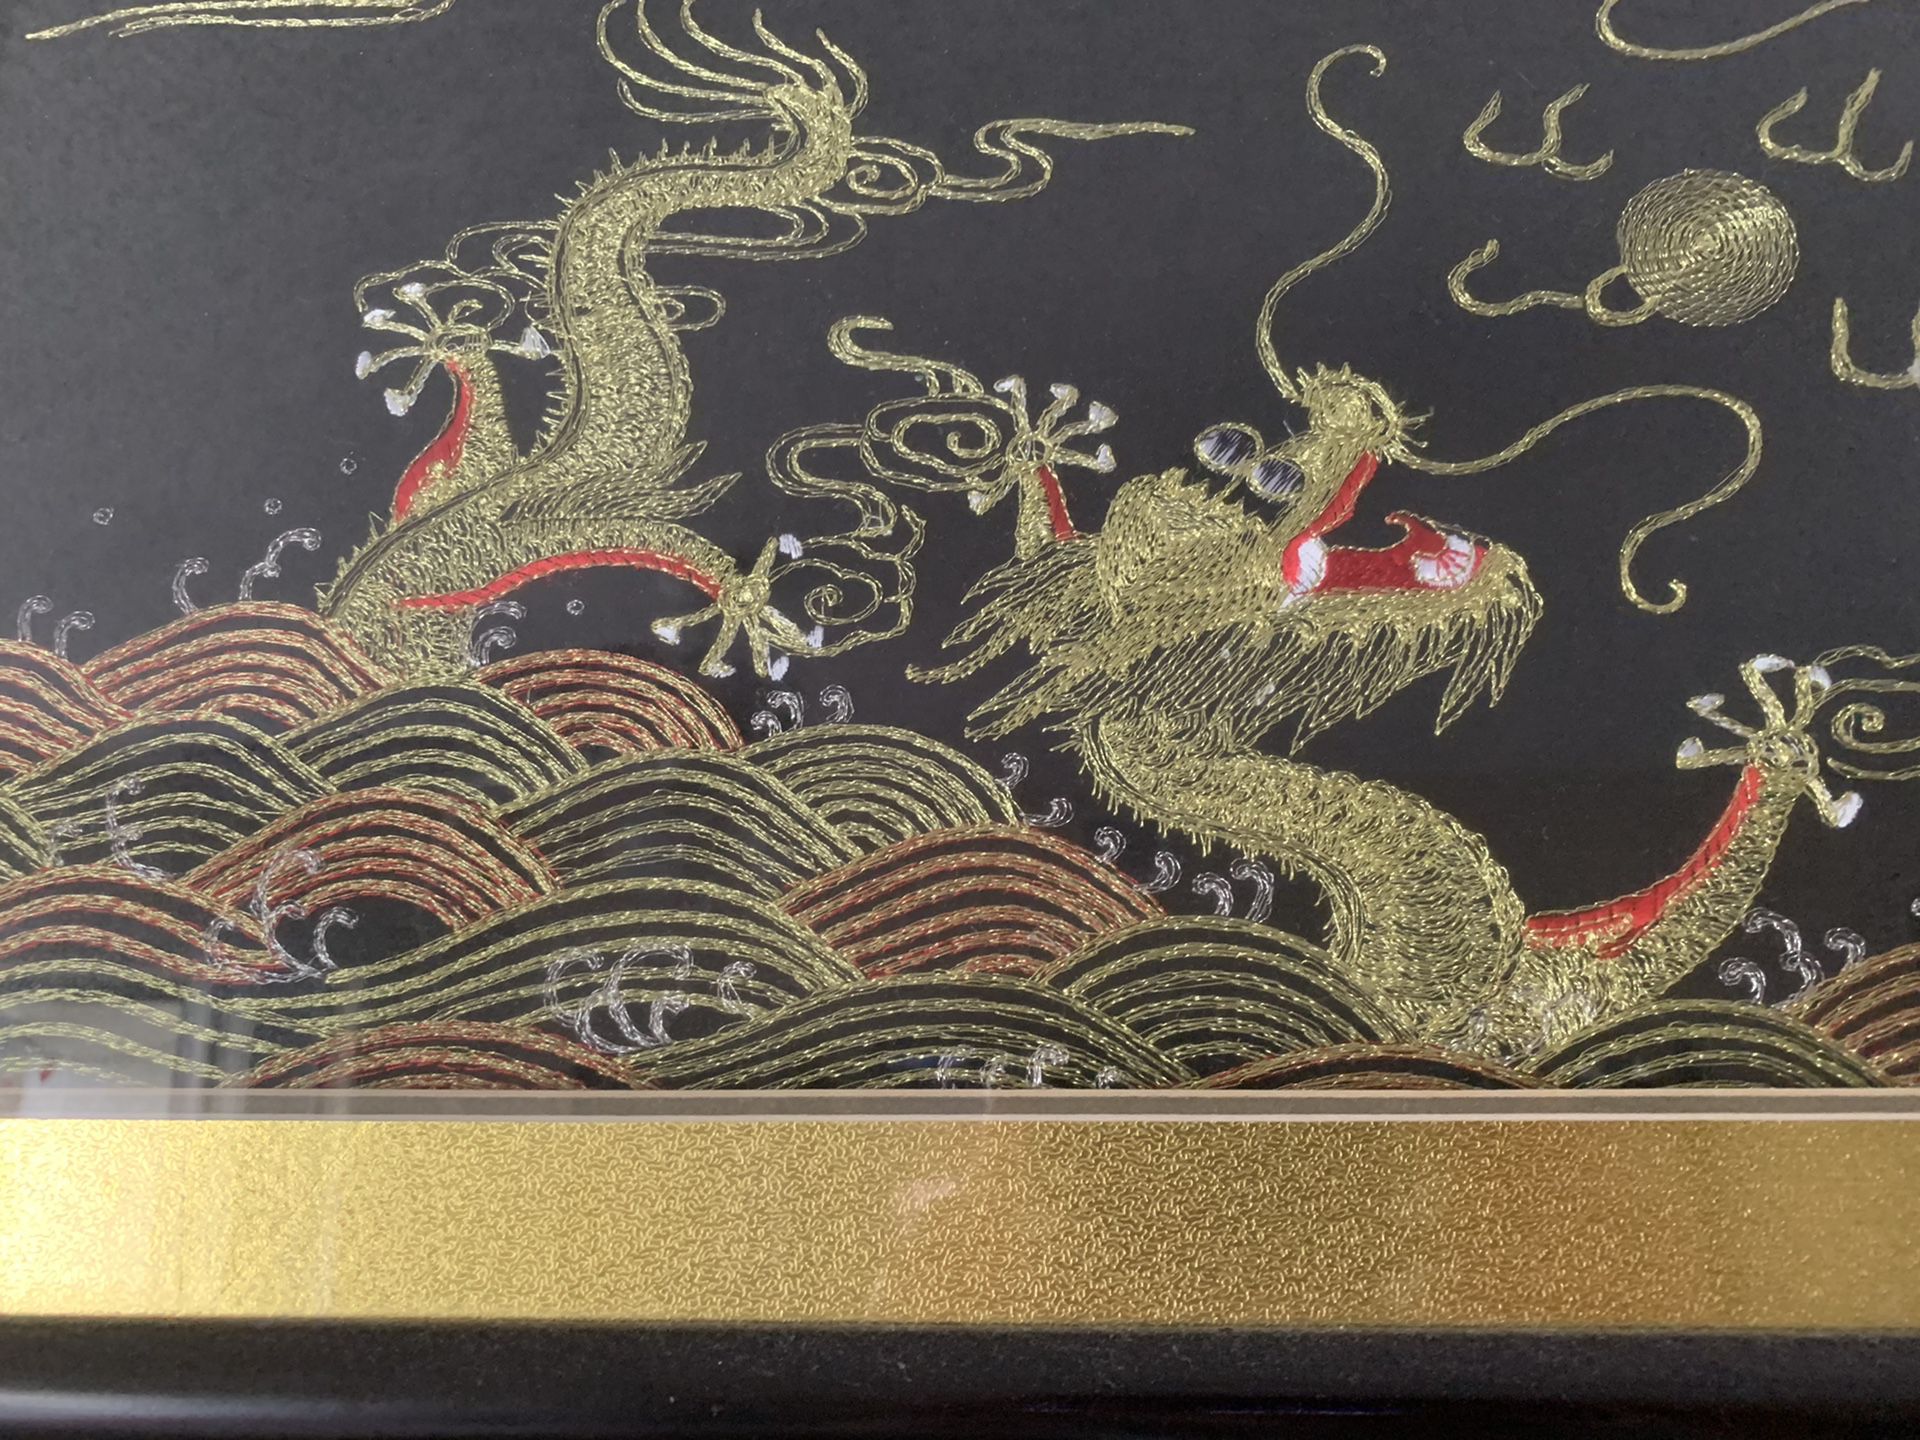 Golden stitched dragon artwork